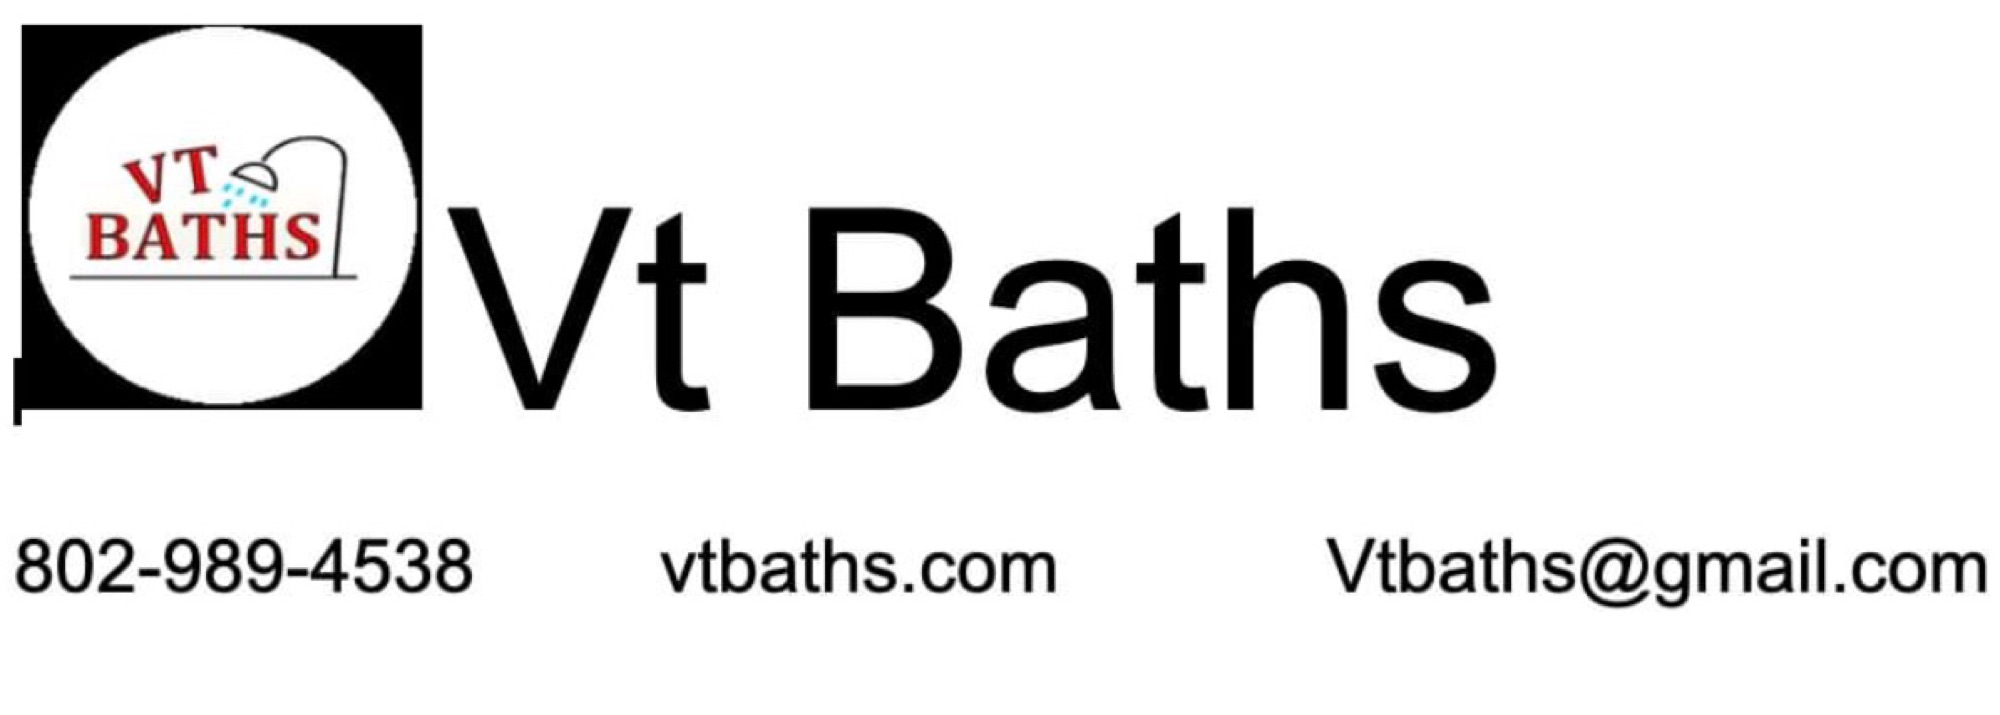 VT Baths Logo